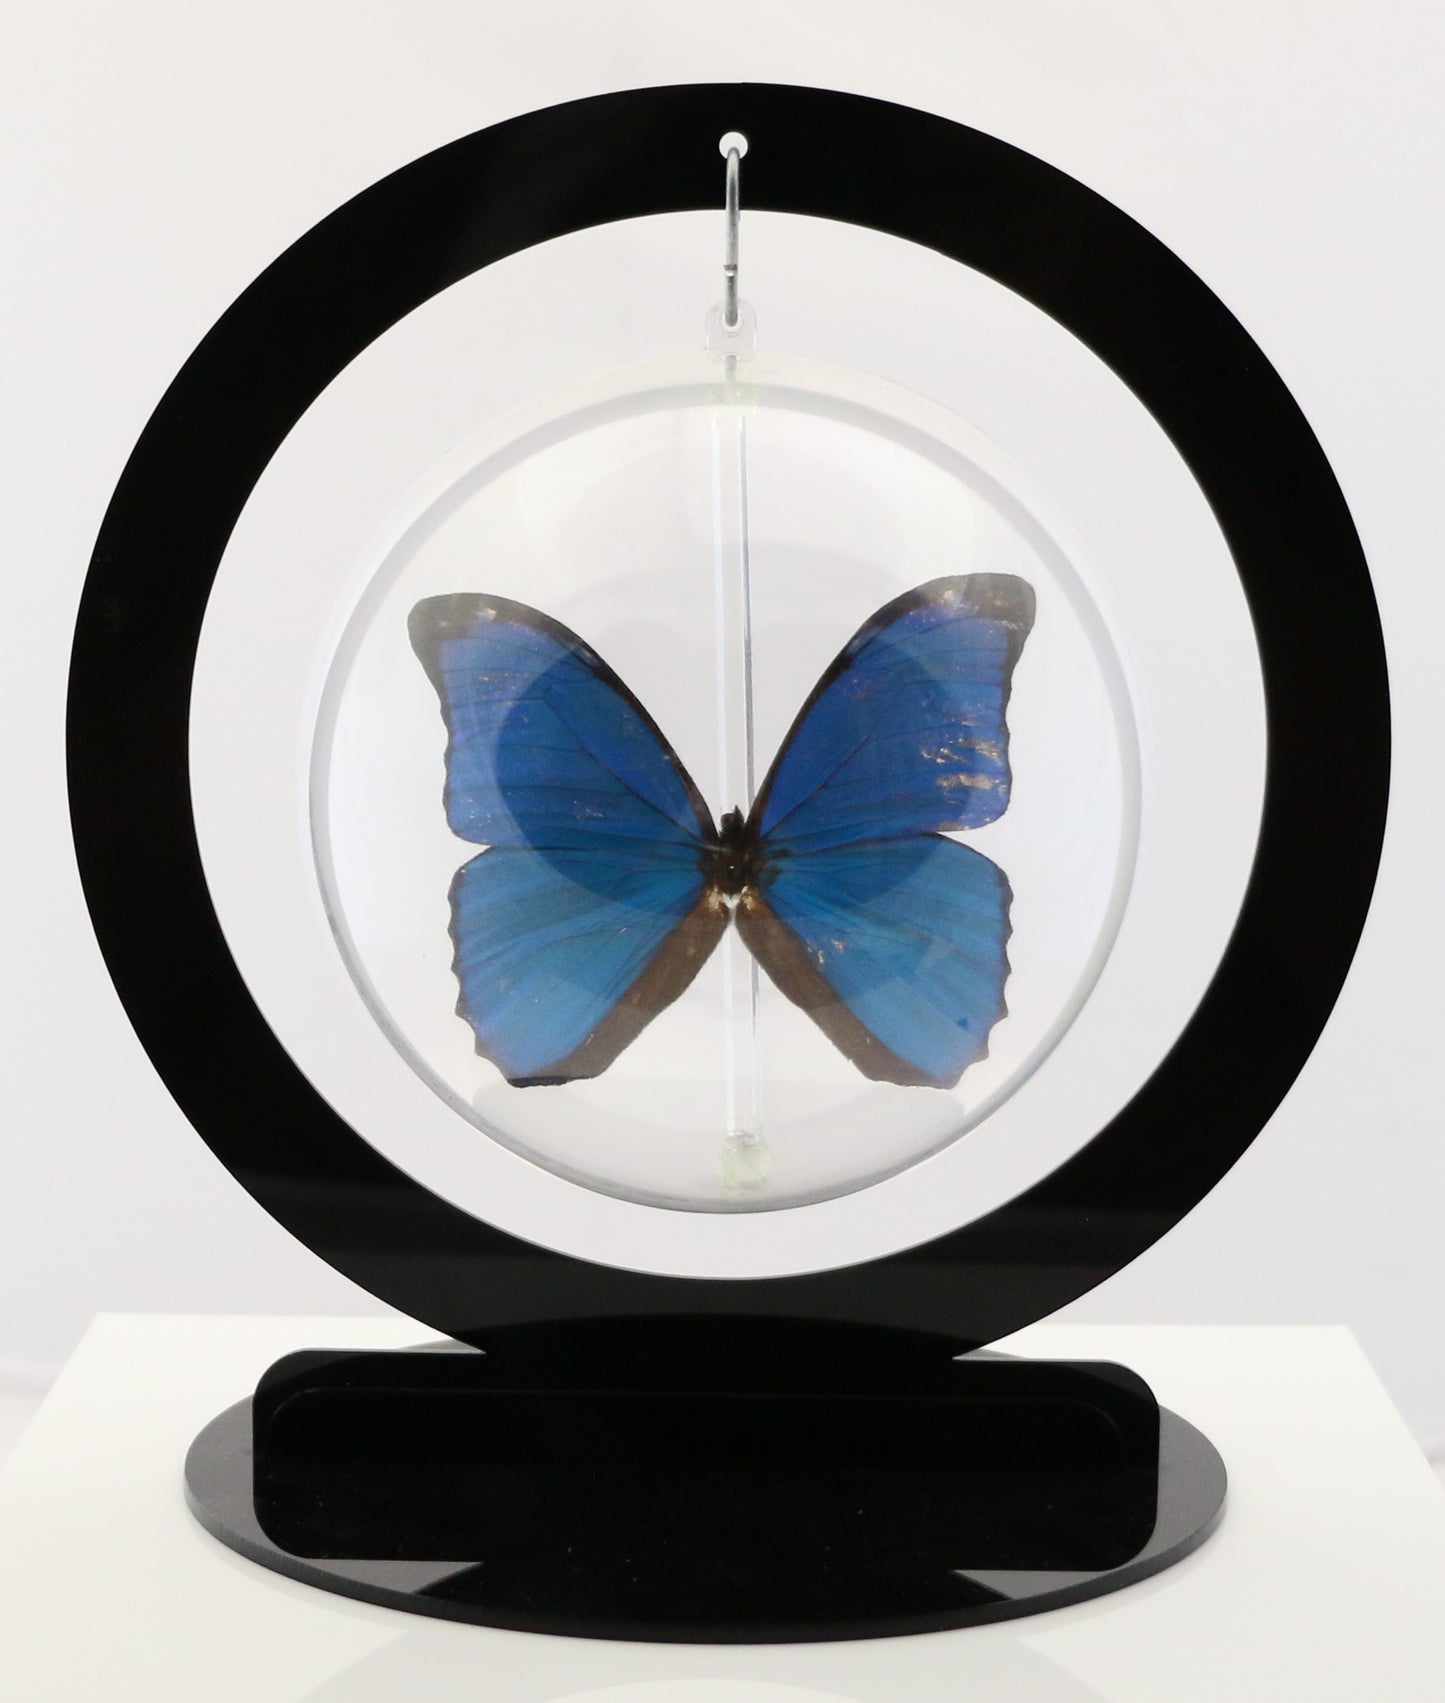 750300 - Butterfly Bubbles - Lg. - Round - Blue Morpho ﻿(Morpho menelaus)